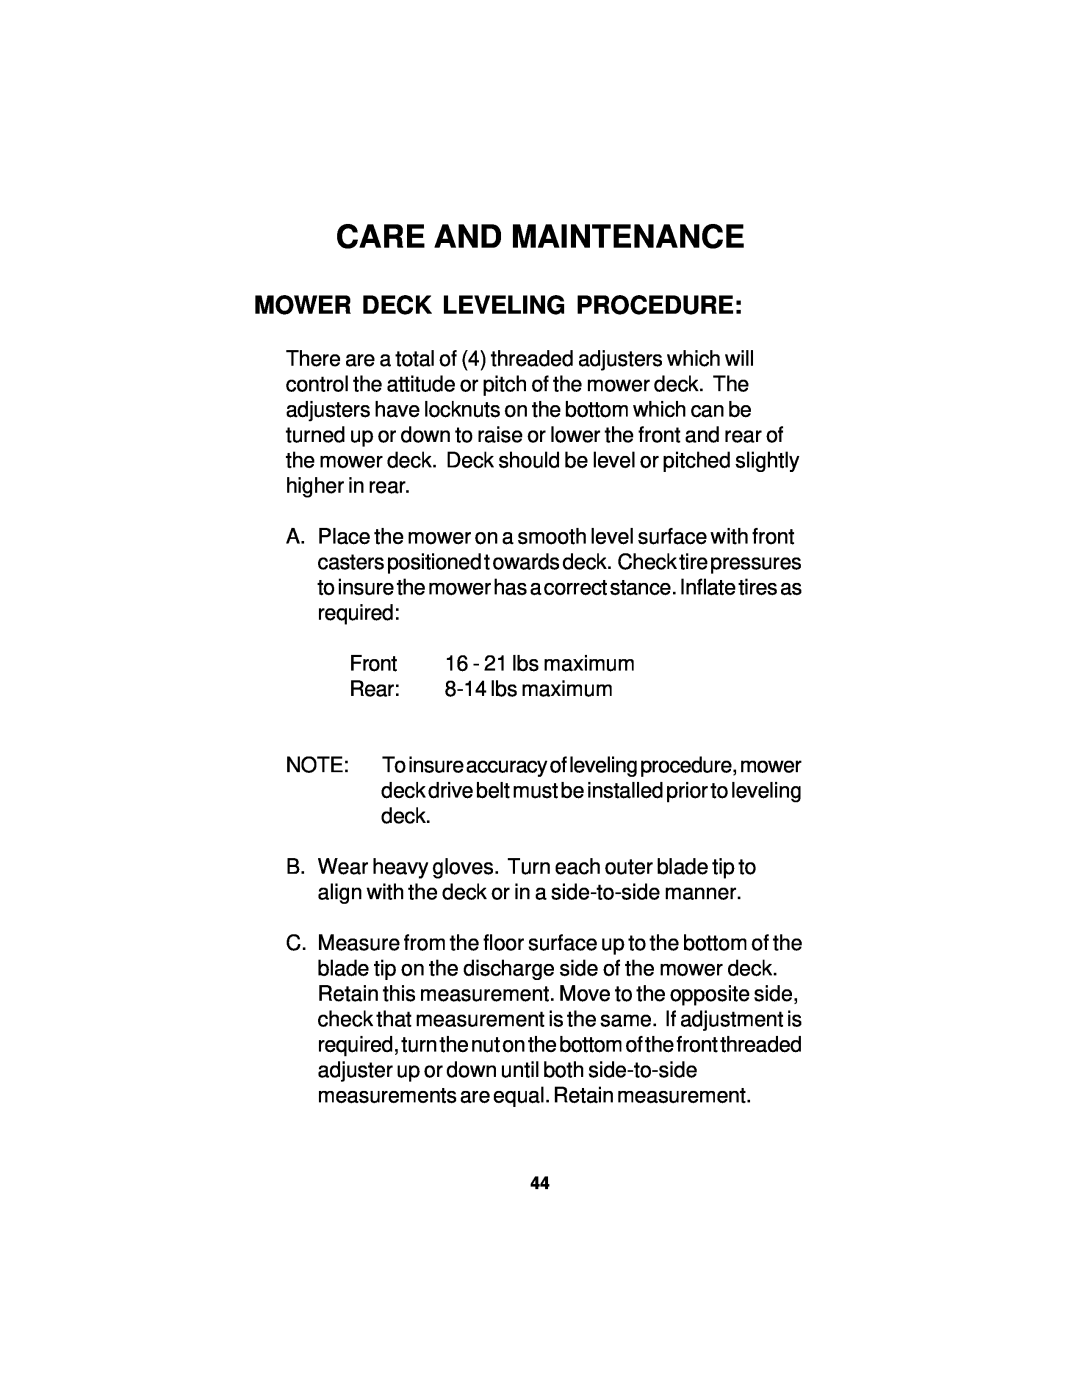 Dixon 18124-0804 manual Mower Deck Leveling Procedure, Care And Maintenance 